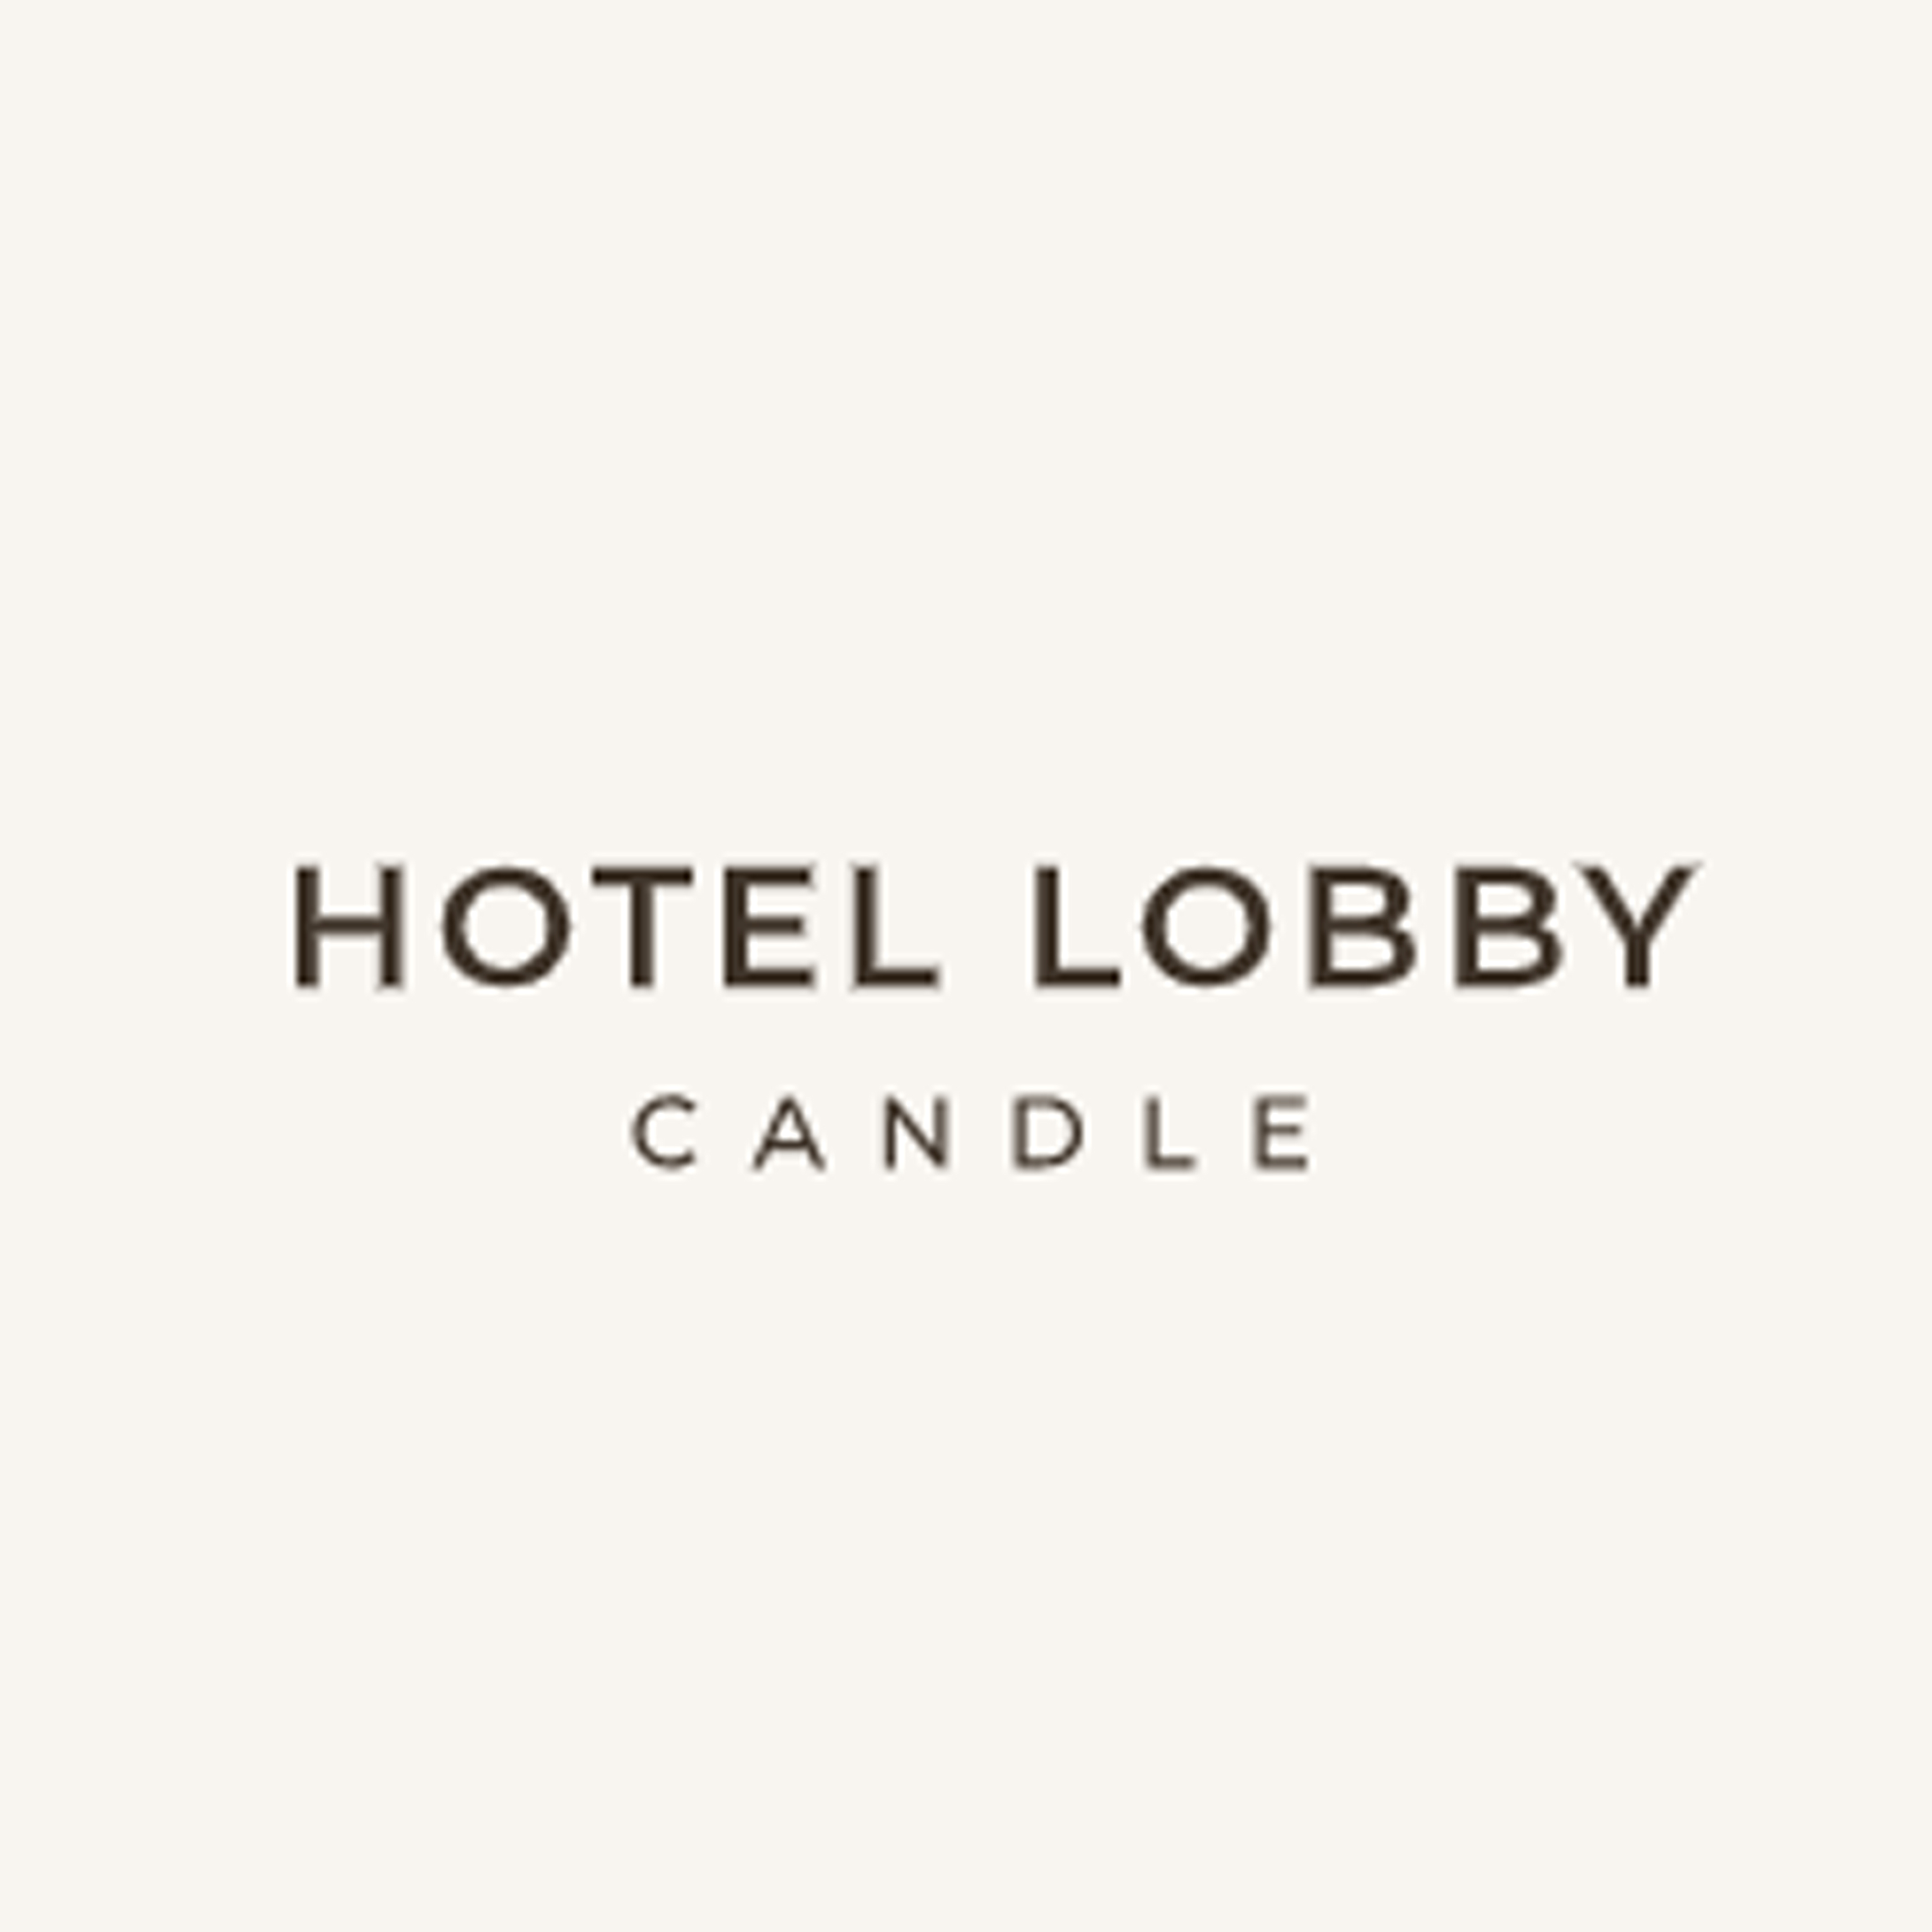 Hotel Lobby Candle logo